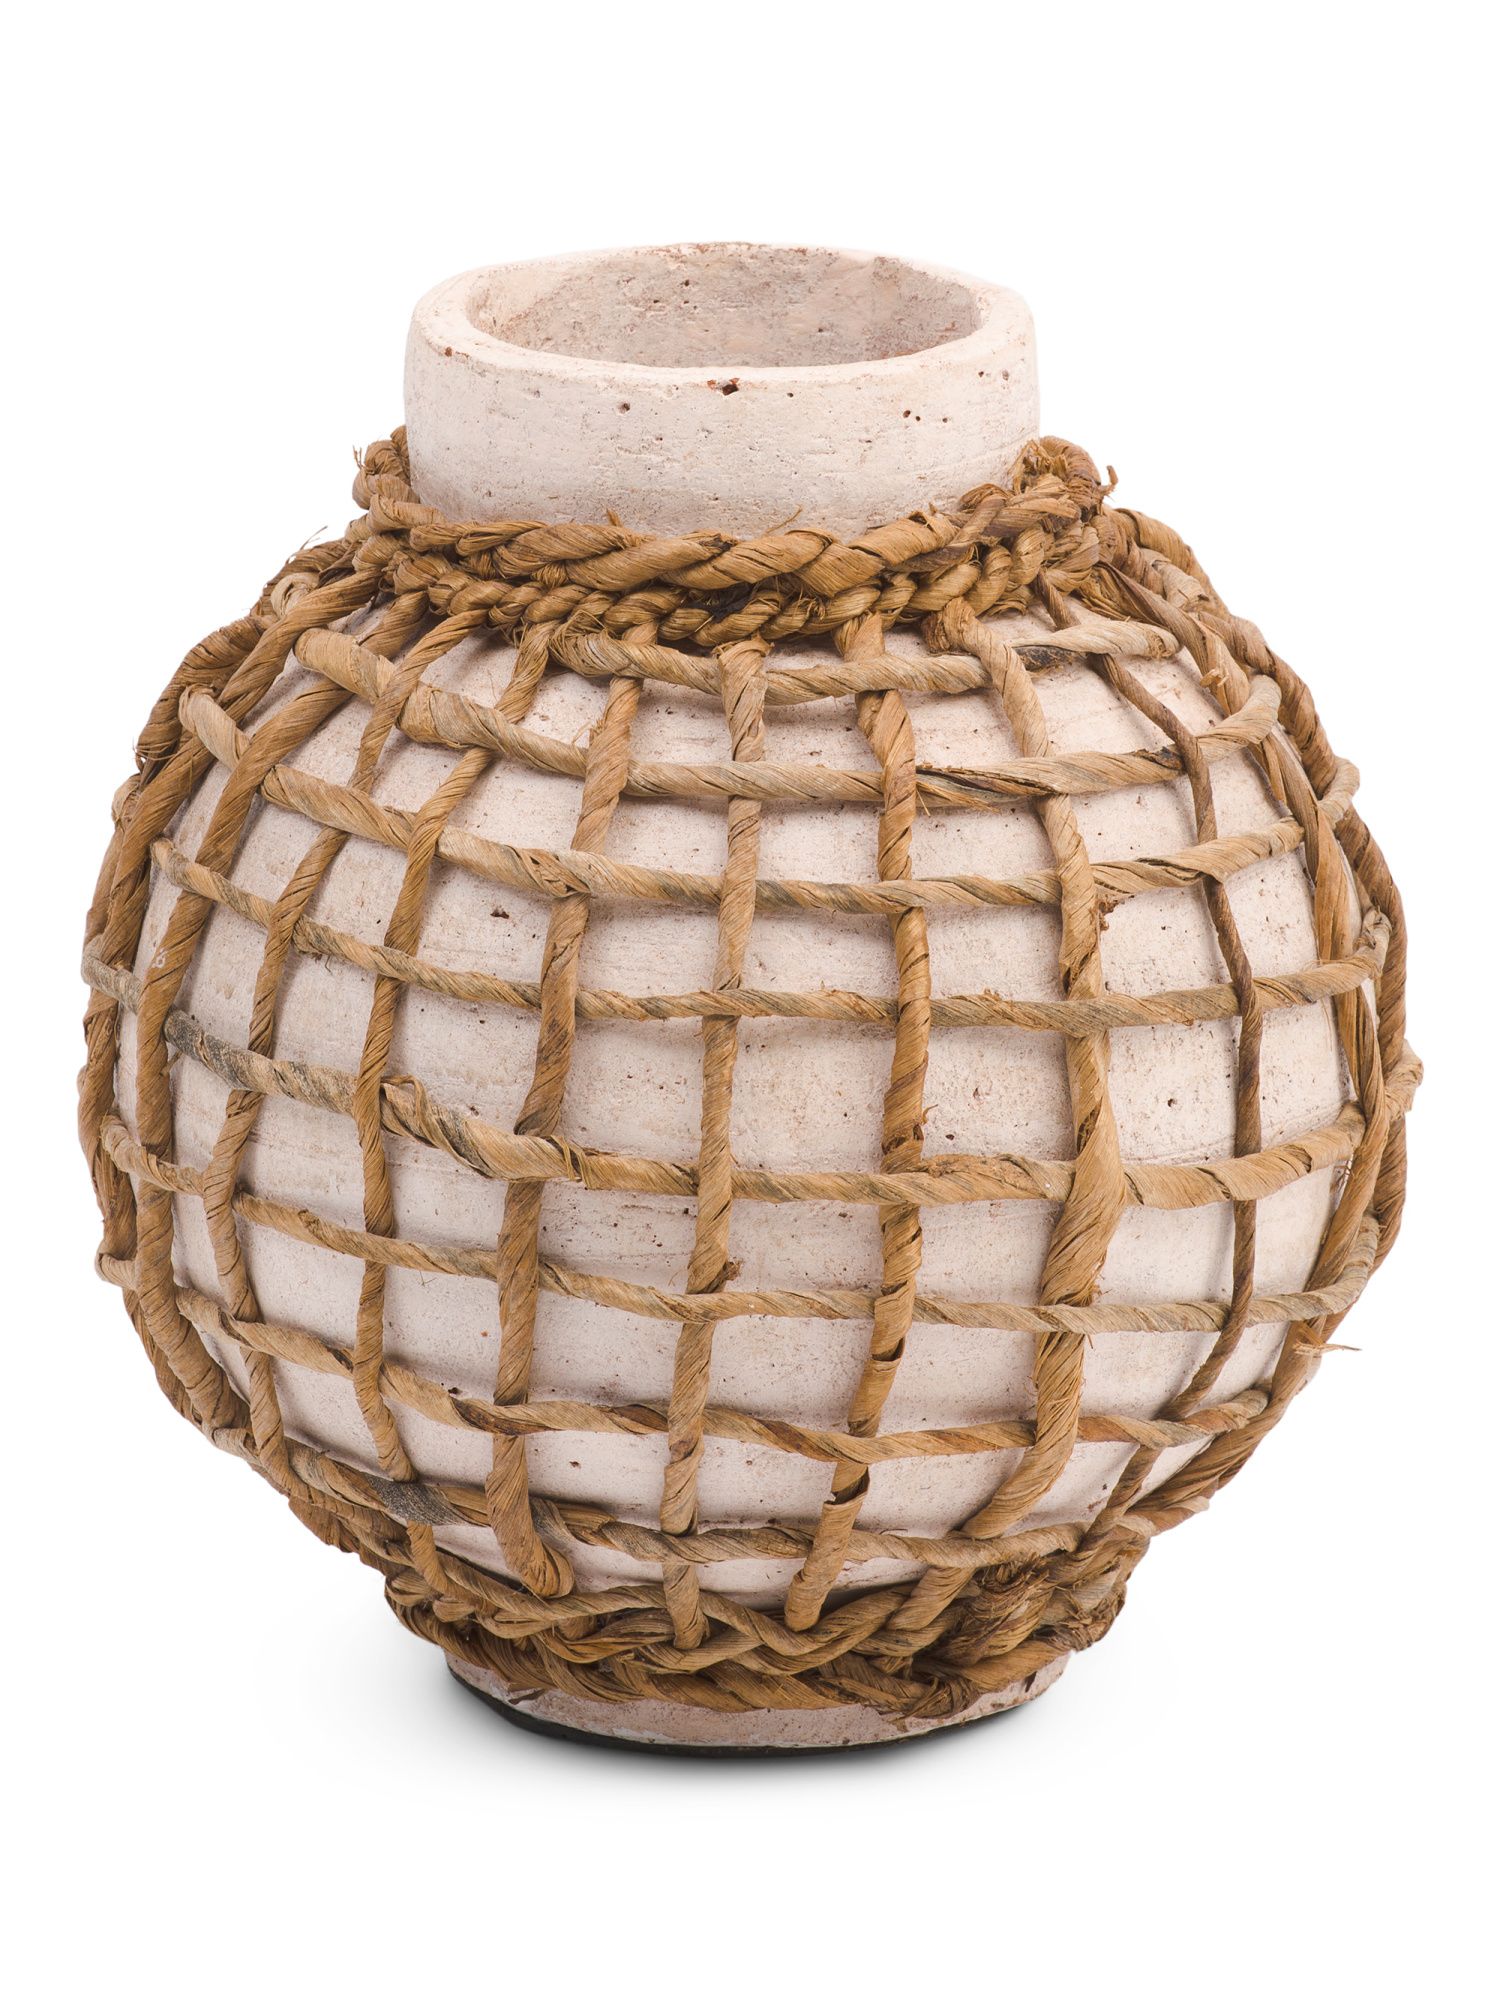 Terracotta Vase With Rattan Wrap | TJ Maxx